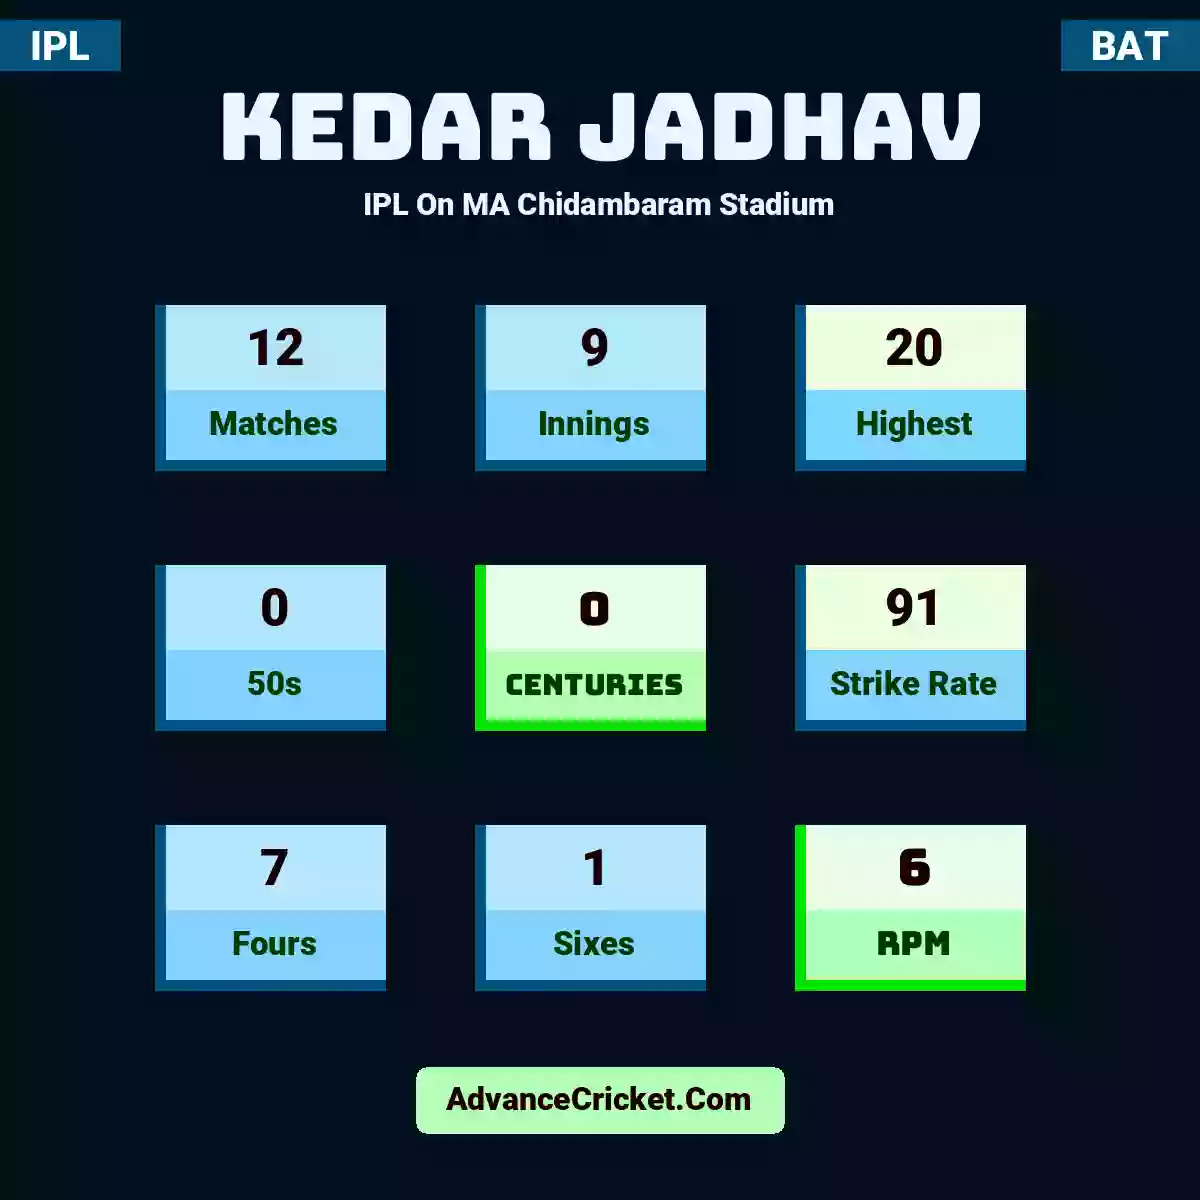 Kedar Jadhav IPL  On MA Chidambaram Stadium, Kedar Jadhav played 12 matches, scored 20 runs as highest, 0 half-centuries, and 0 centuries, with a strike rate of 91. K.Jadhav hit 7 fours and 1 sixes, with an RPM of 6.